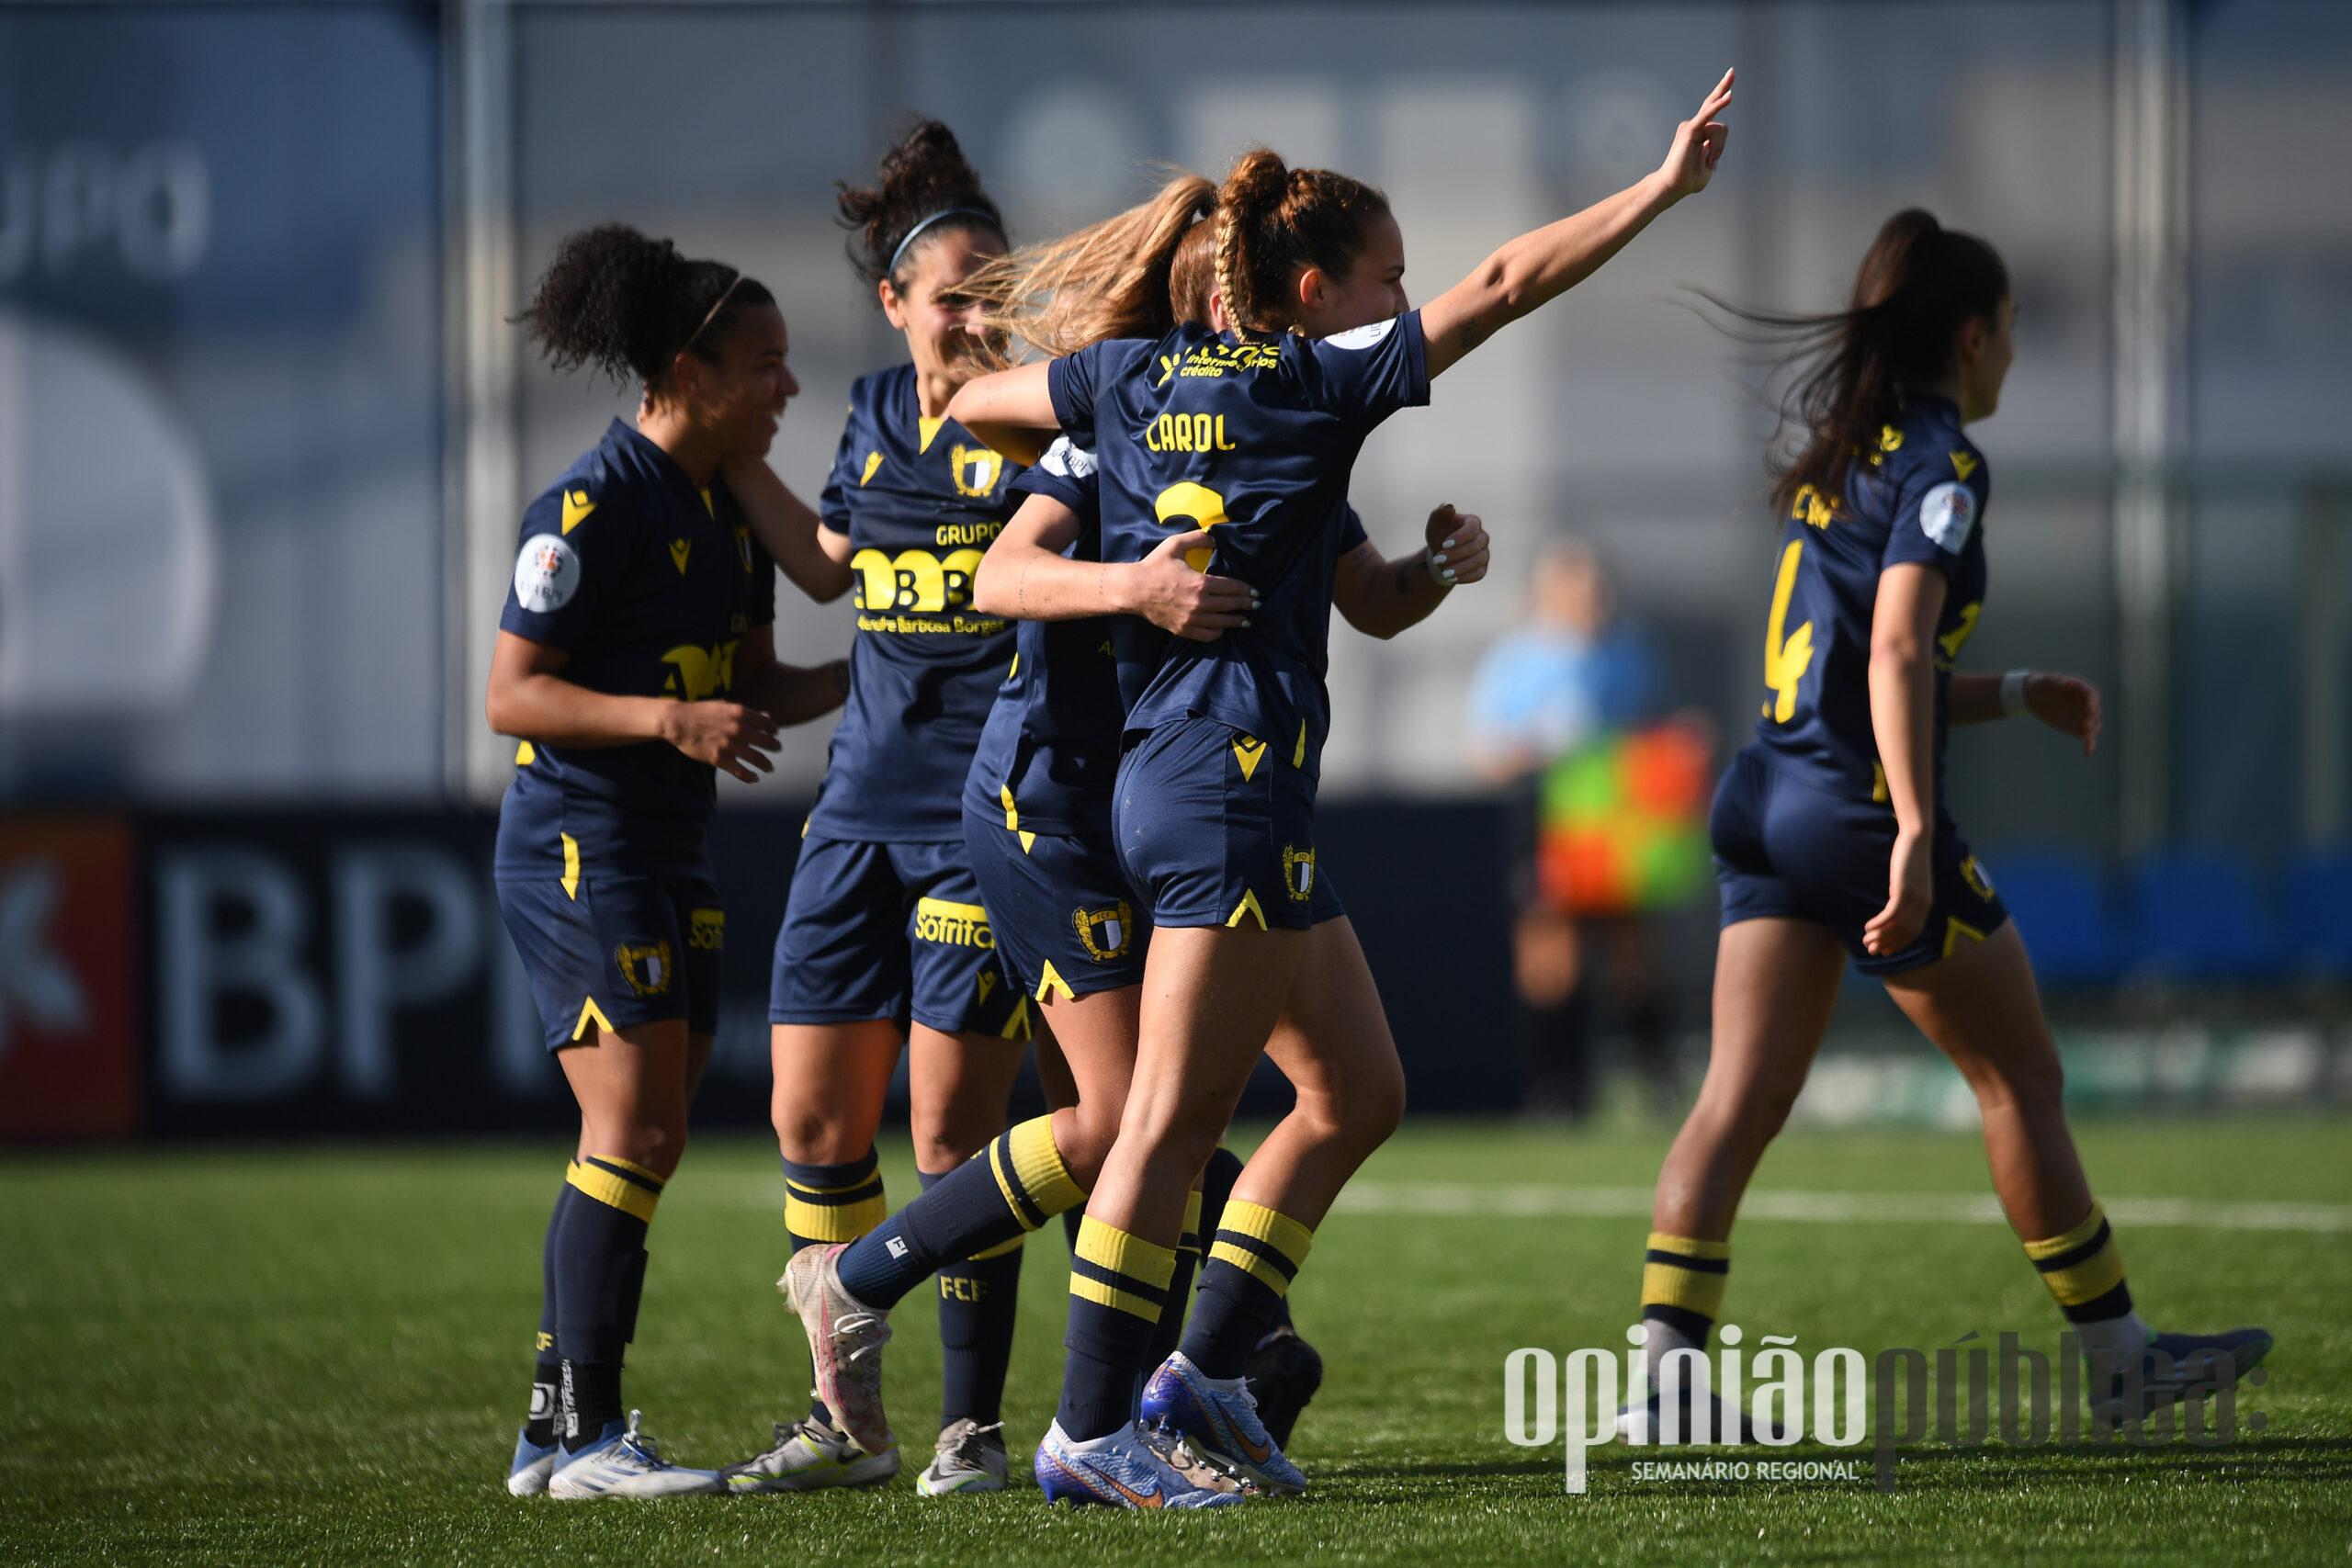 Clube Desportivo 1º de Agosto - Equipa feminina de futebol do 1